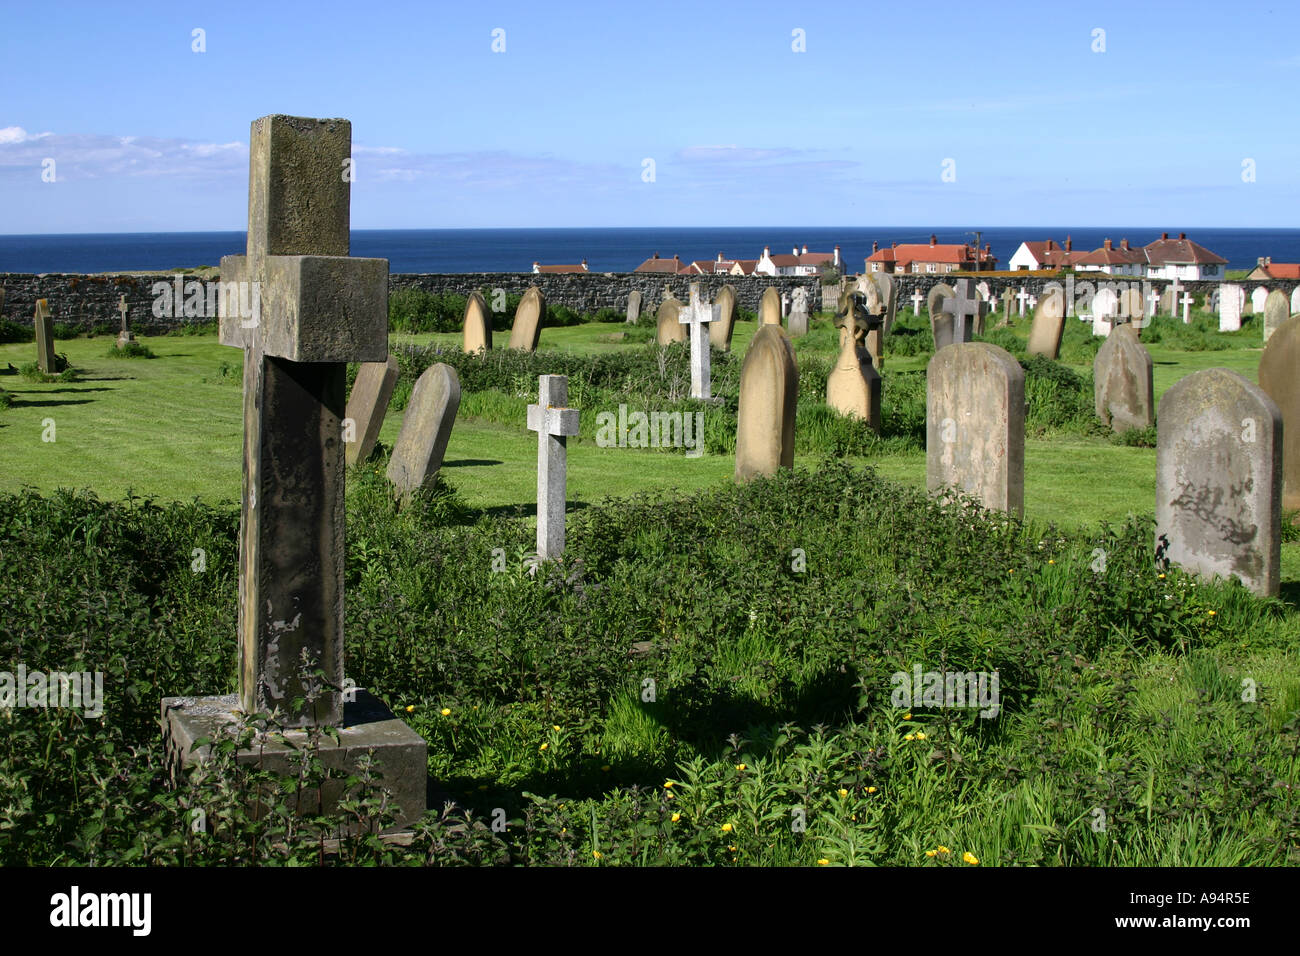 Graveyard of the church of saint Aidan in Bamburgh Stock Photo